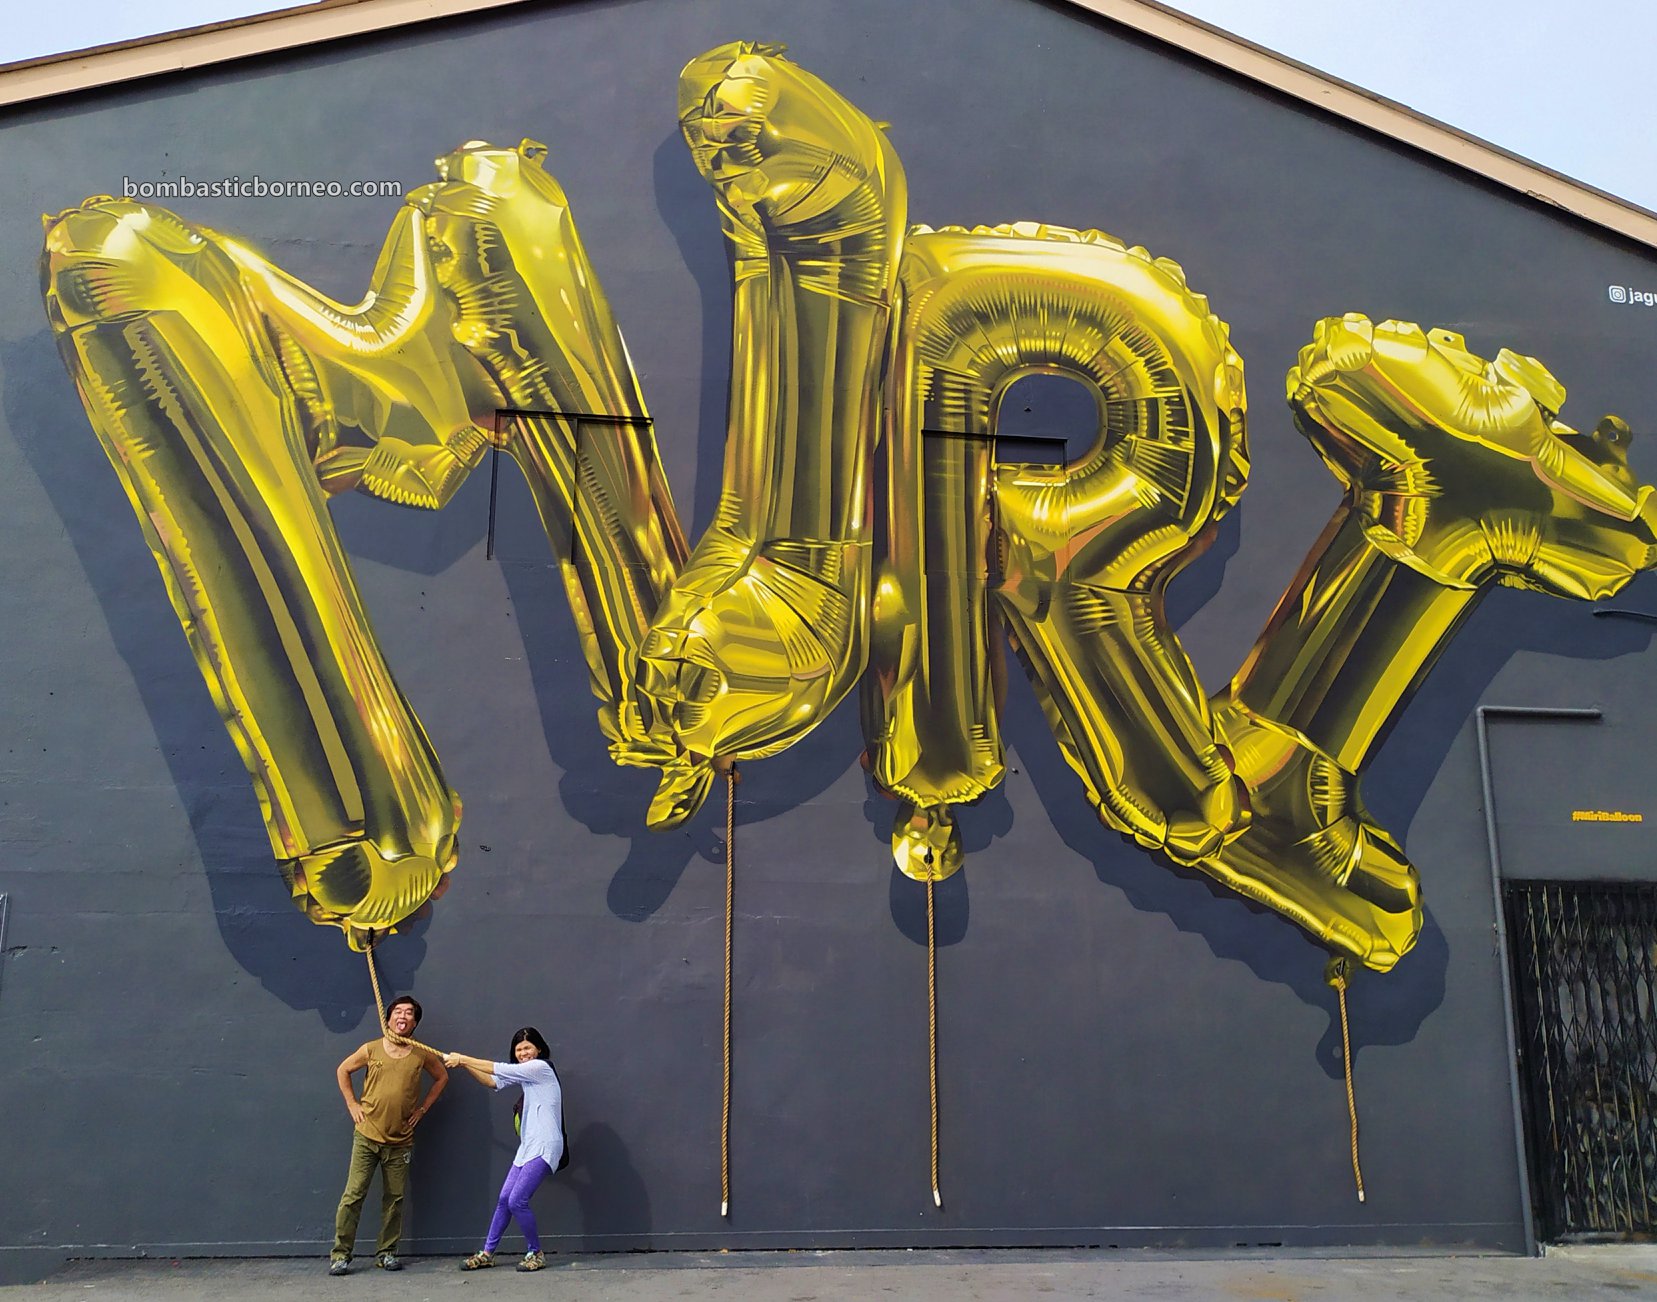 Miri Balloon, Street murals painting, backpackers, destination, Discover Miri City, exploration, Malaysia, Tourism, tourist attraction, Travel guide, Borneo, Sarawak, Miri